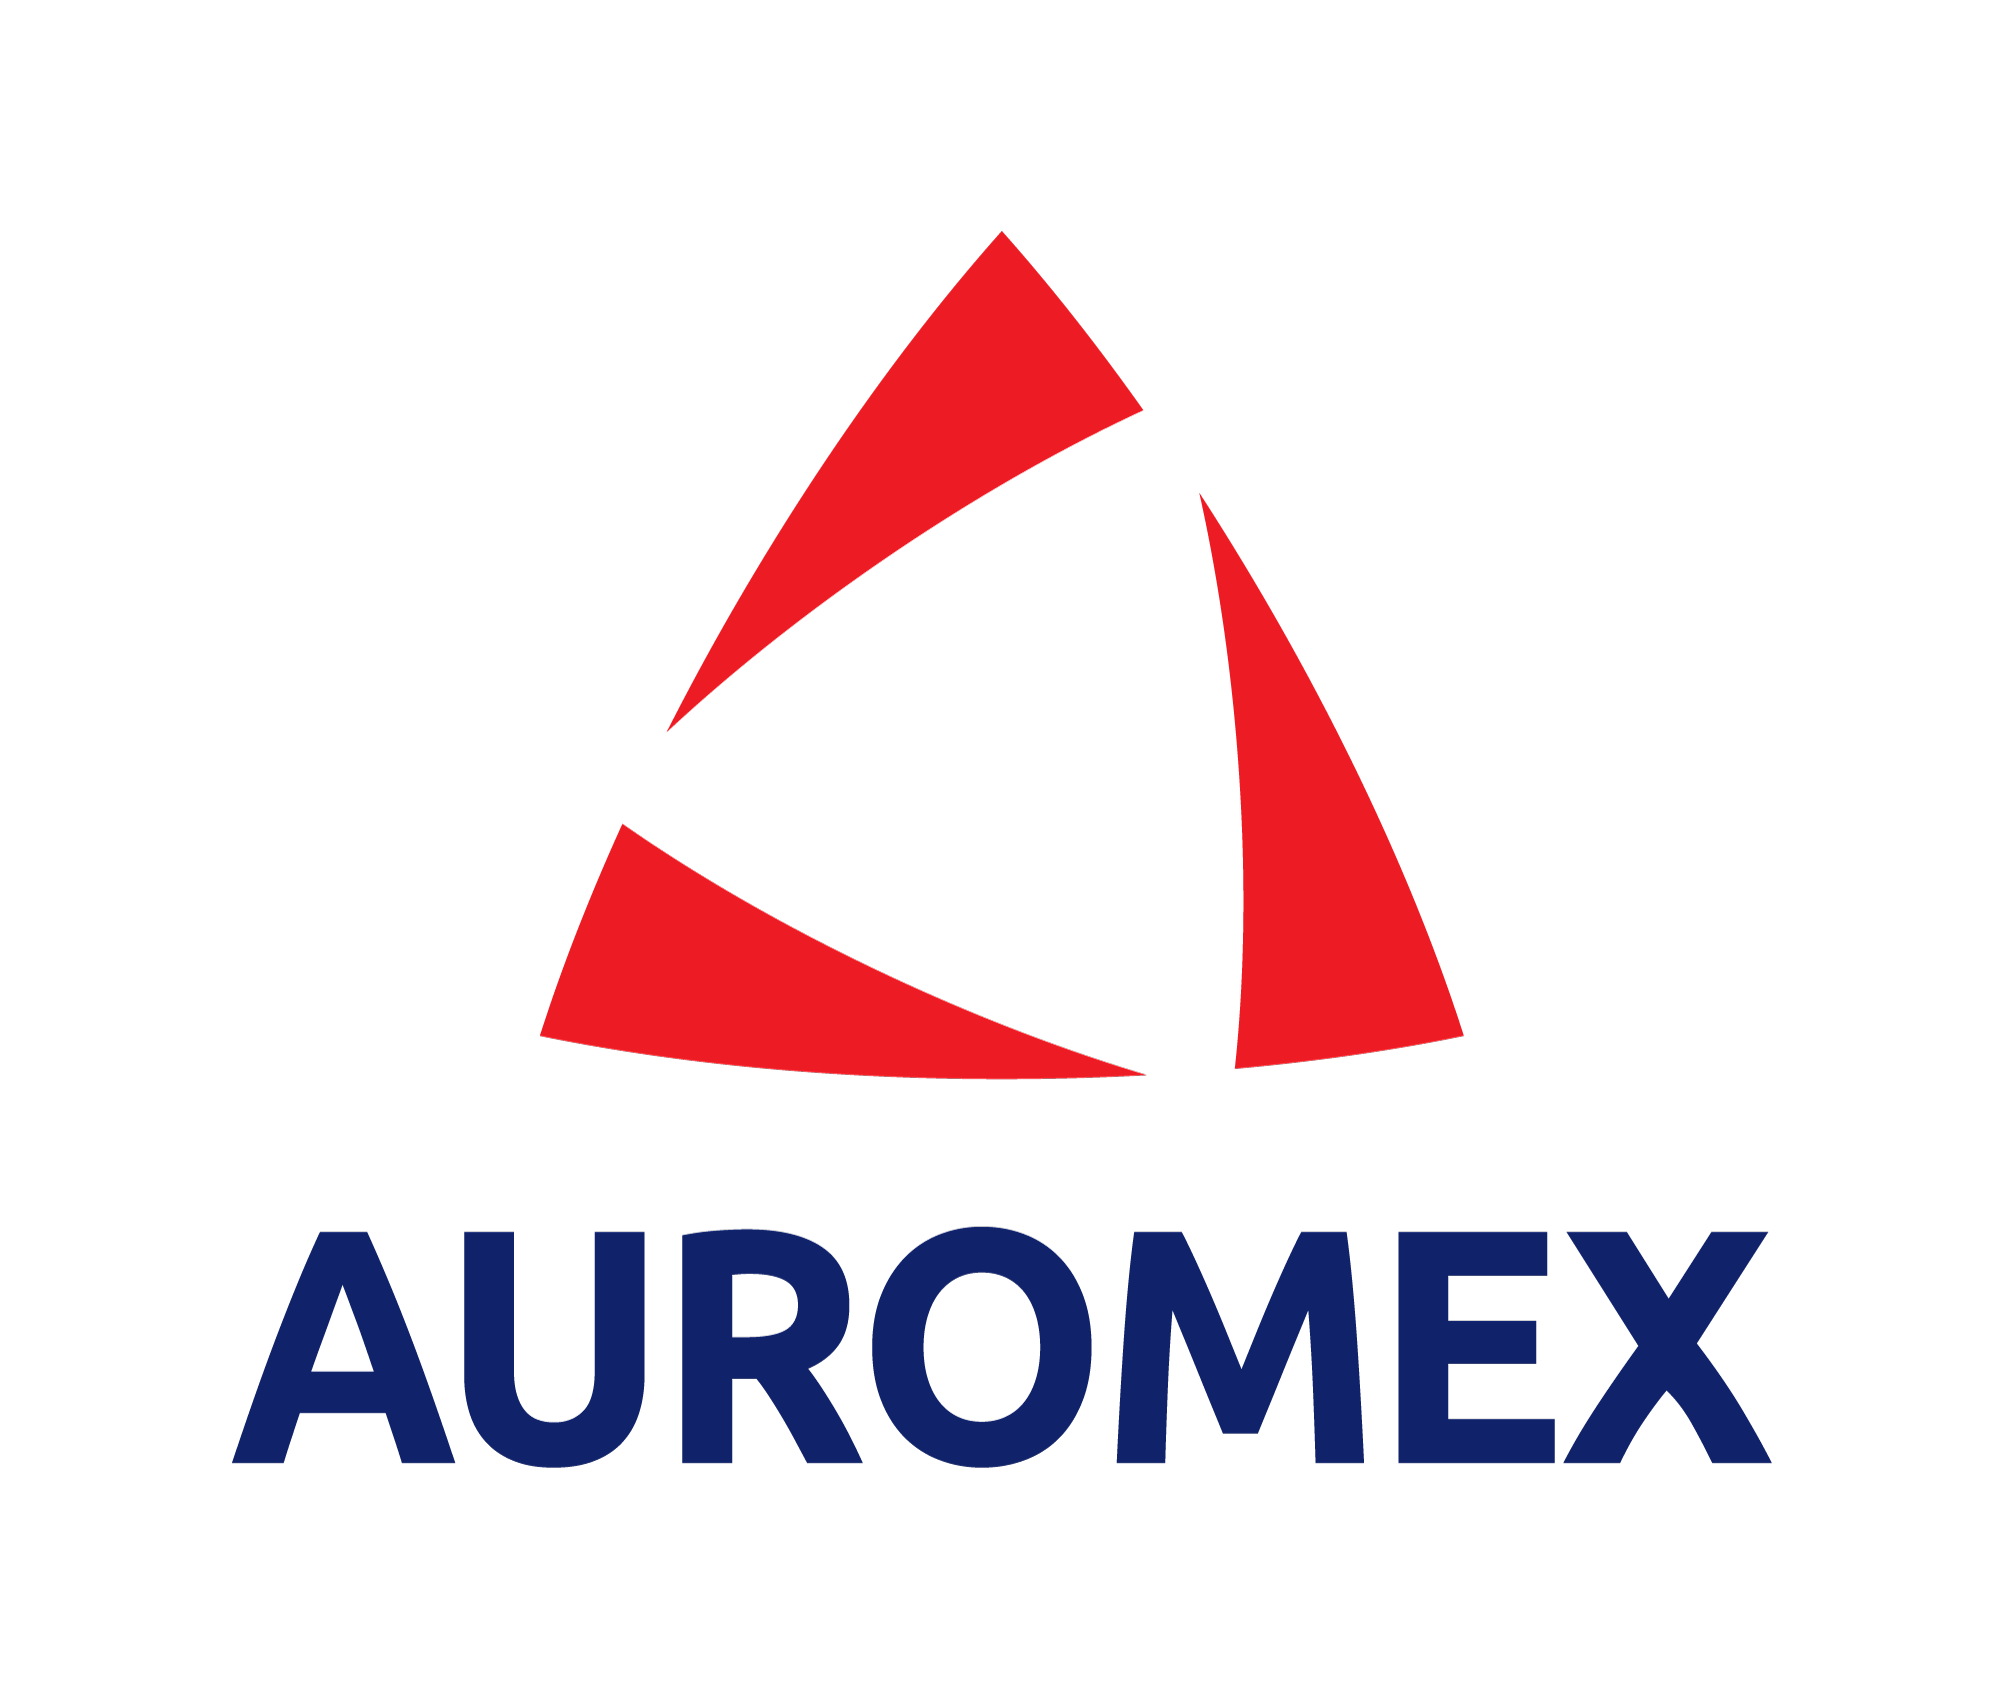 Auromex Co., Ltd